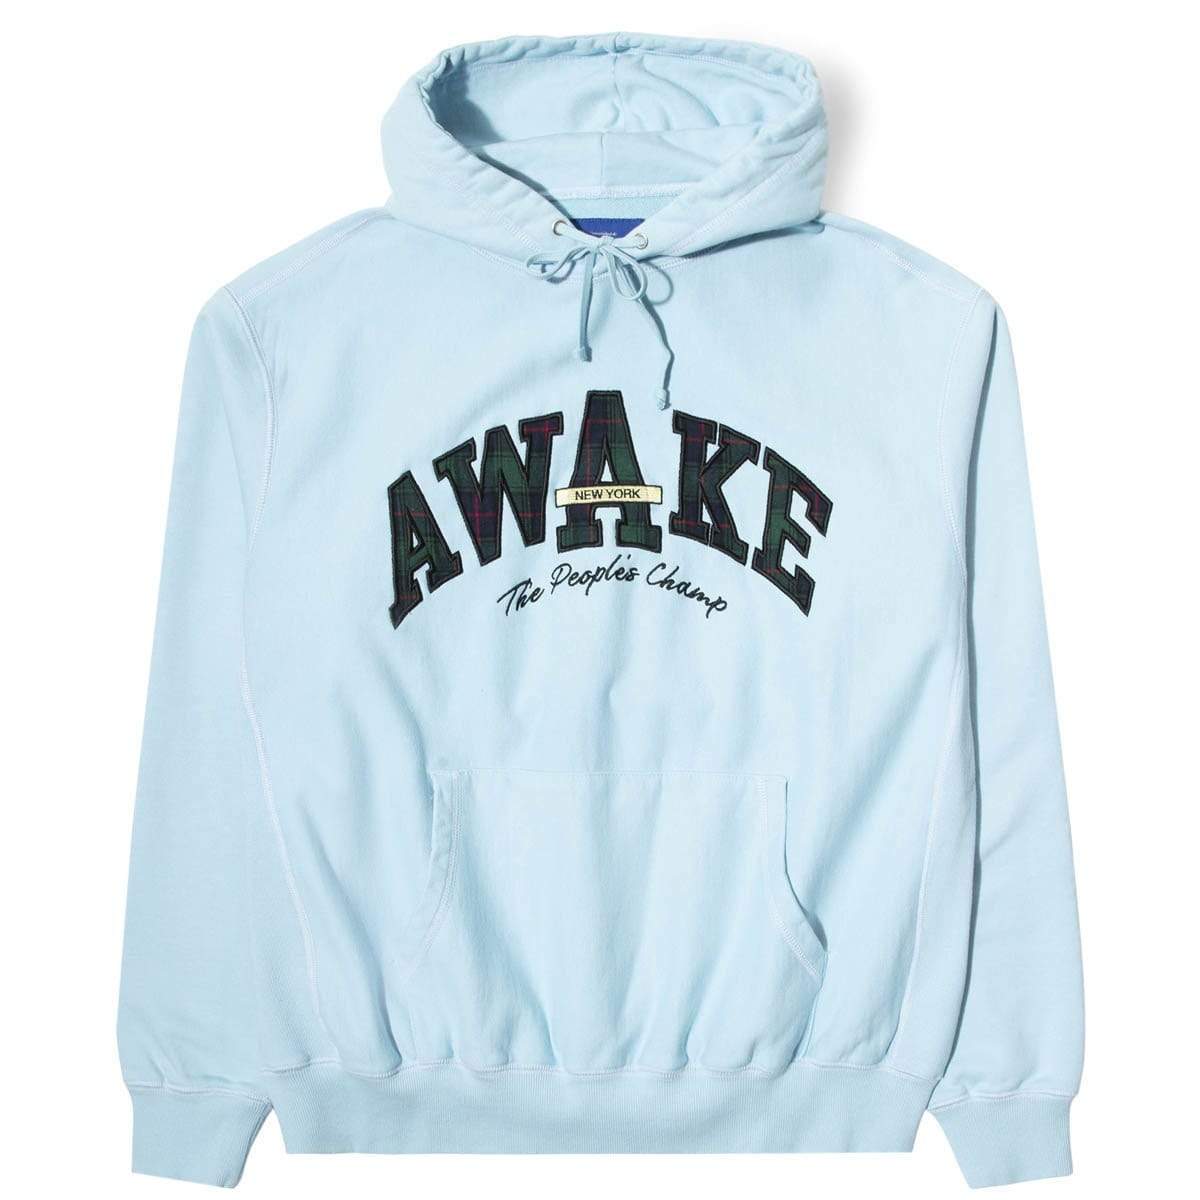 Awake NY Hoodies & Sweatshirts PEOPLES CHAMP PLAID LOGO HOODIE